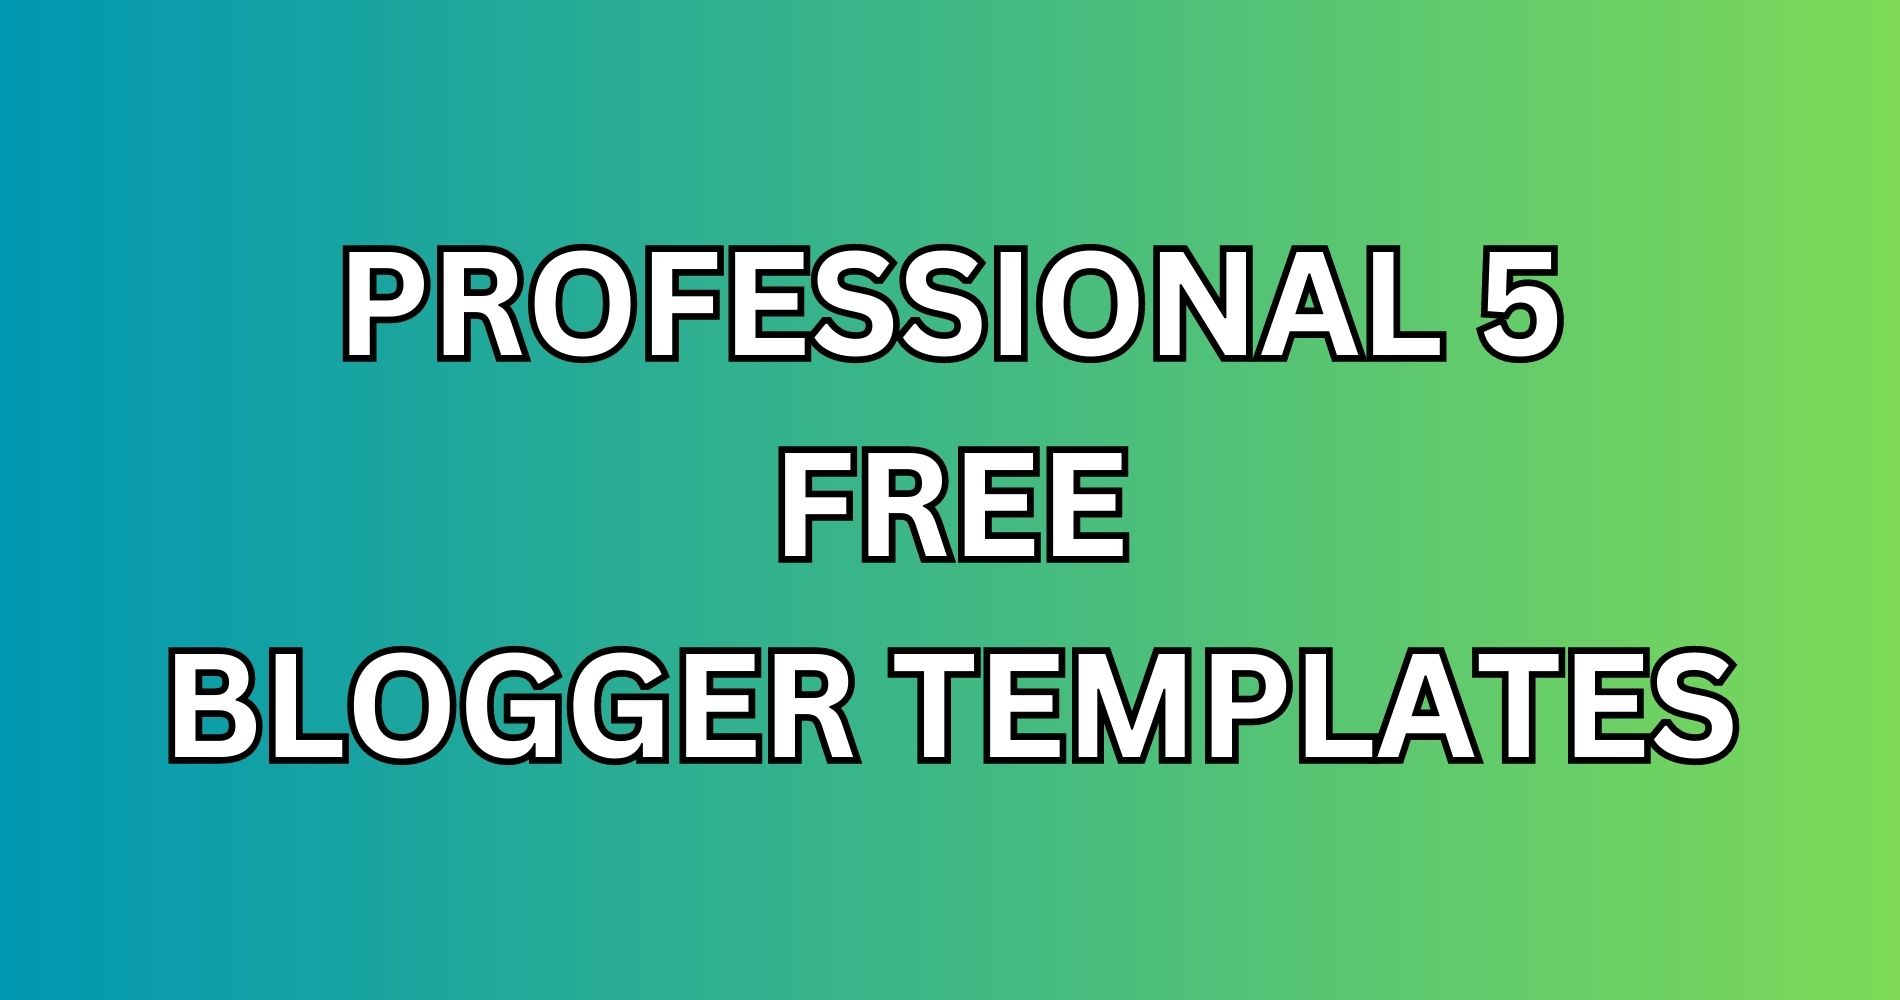 Professional 5 Free Blogger Templates